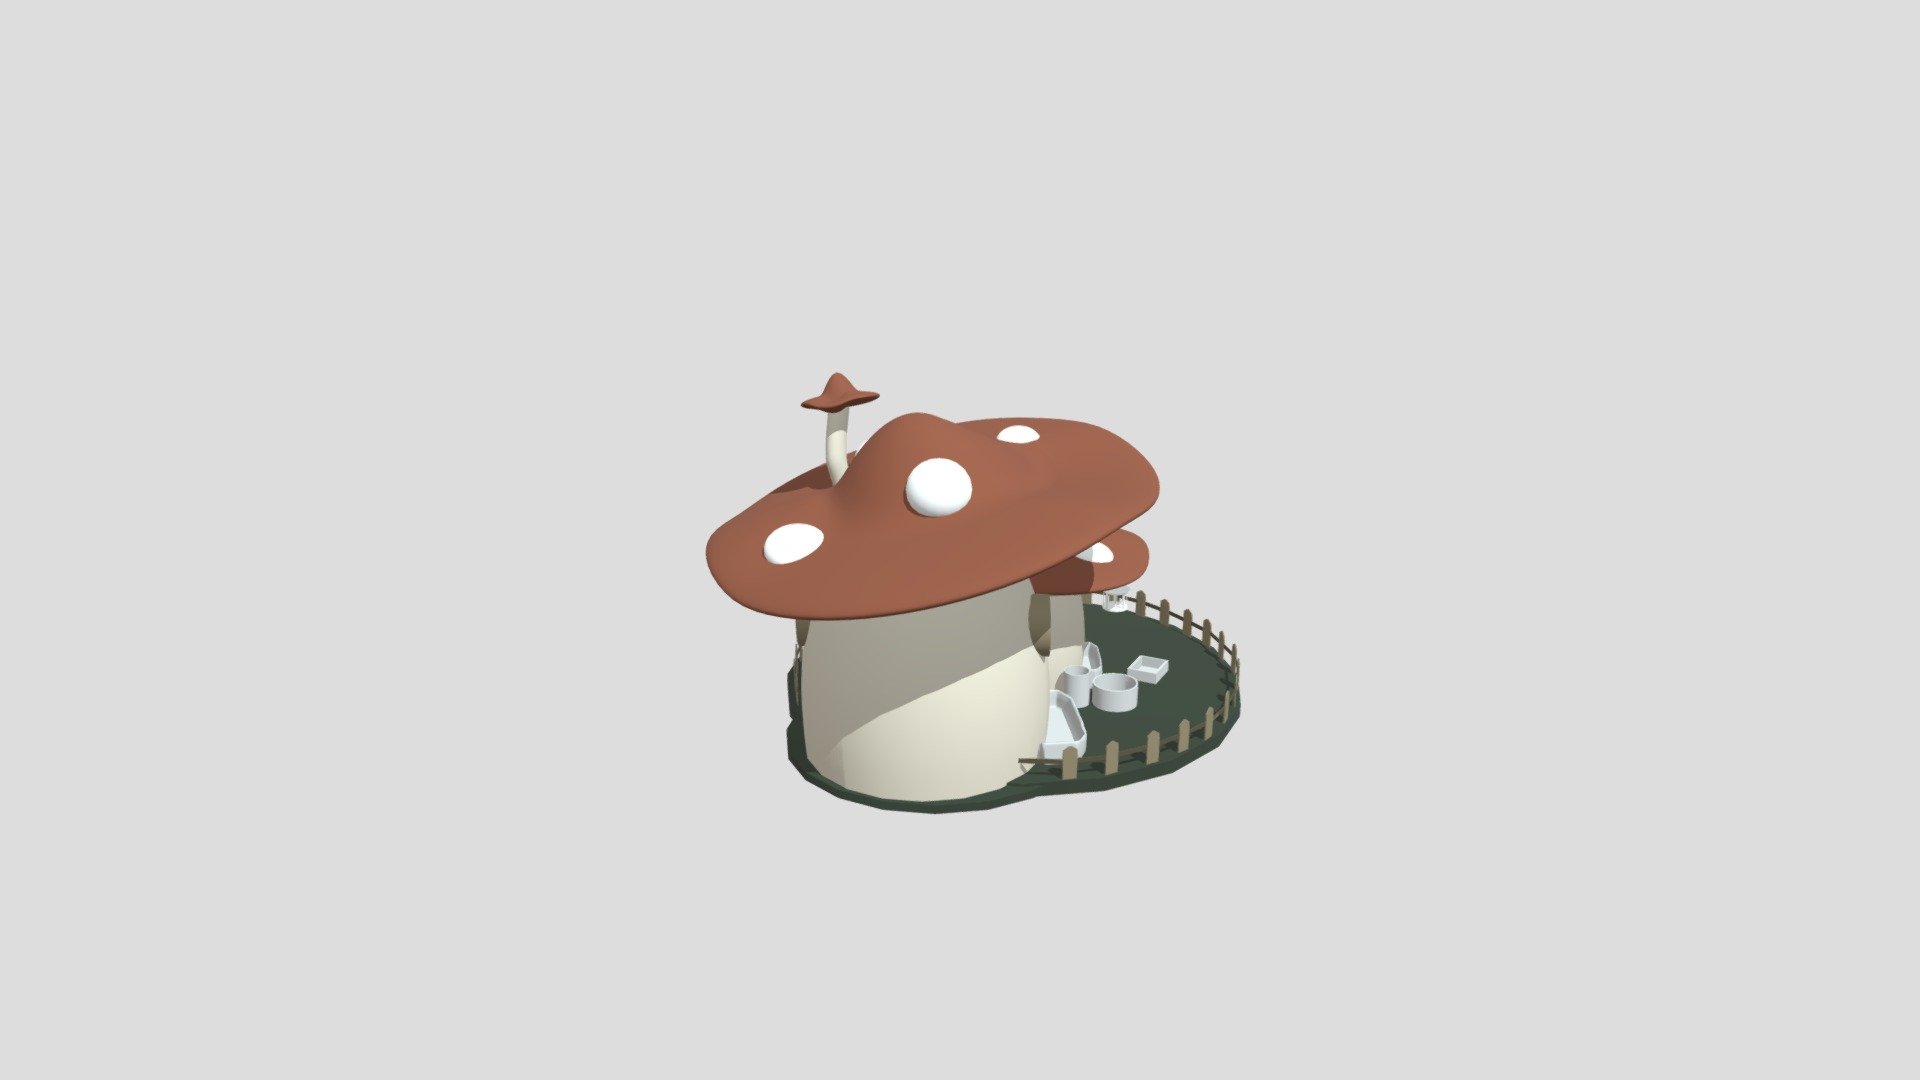 Its a house, but as a mushroom - MUSHROOMHOUSE - 3D model by TrinityFox-Stephens 3d model